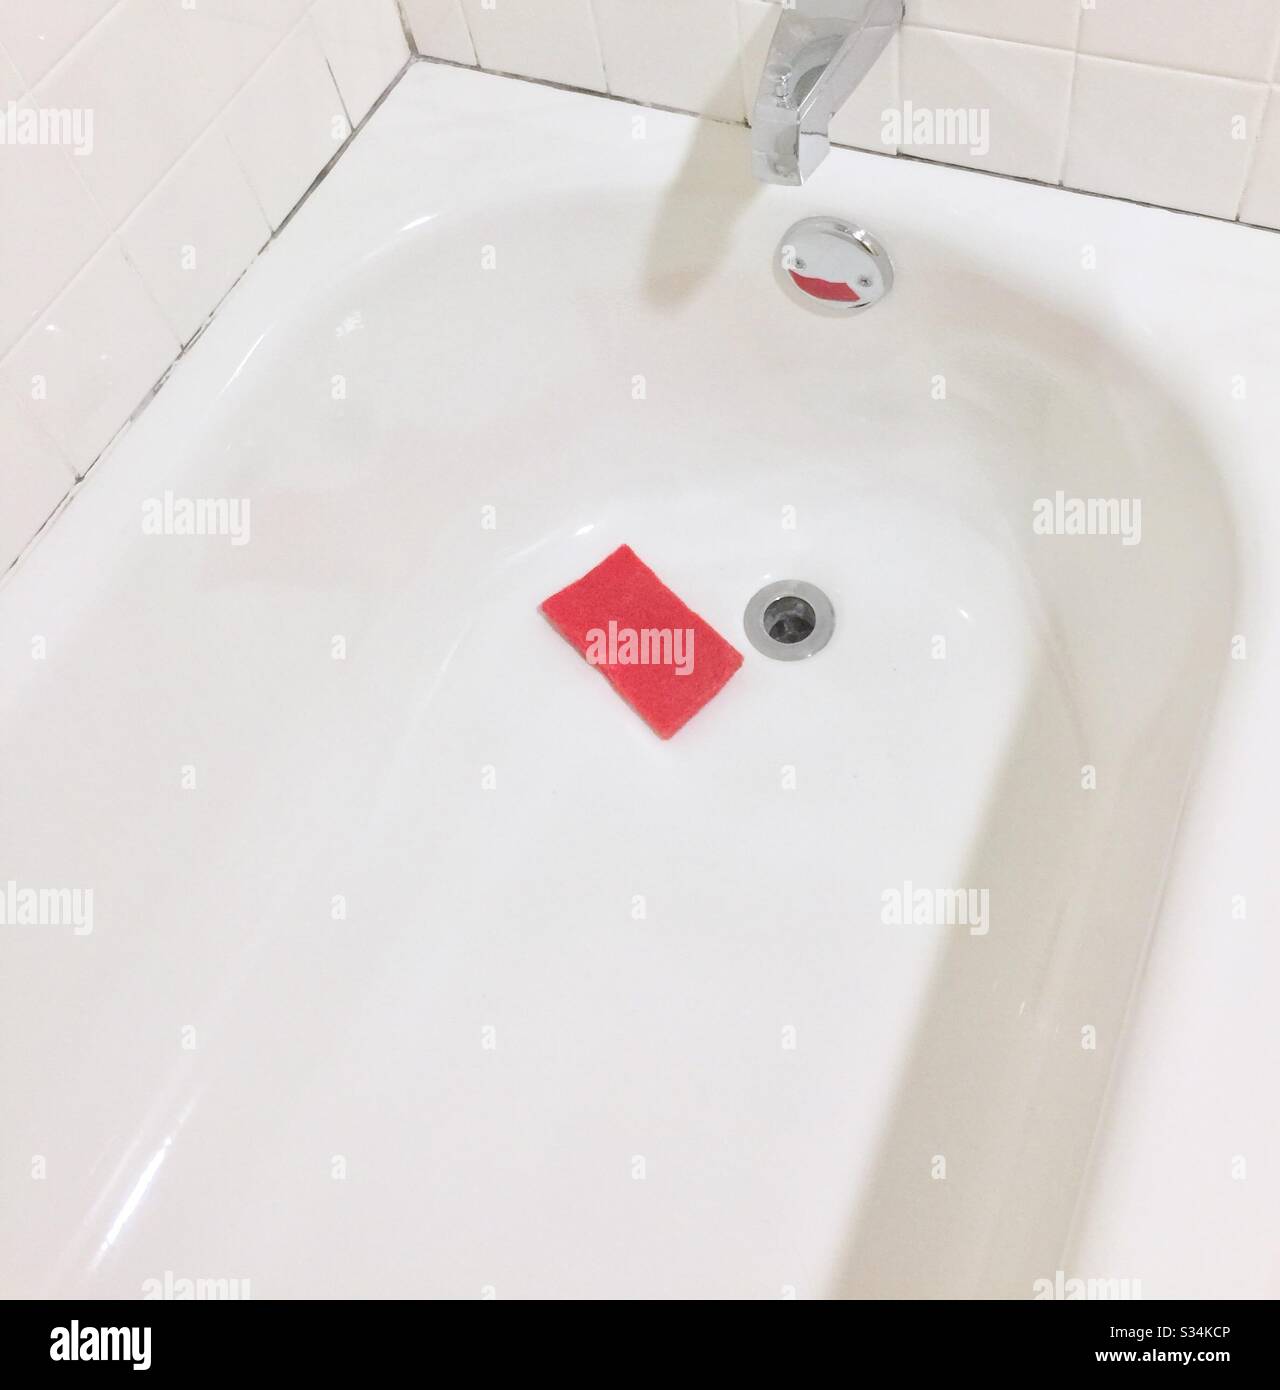 Gleaming white bath tub with red scour sponge near bath drain. Stock Photo